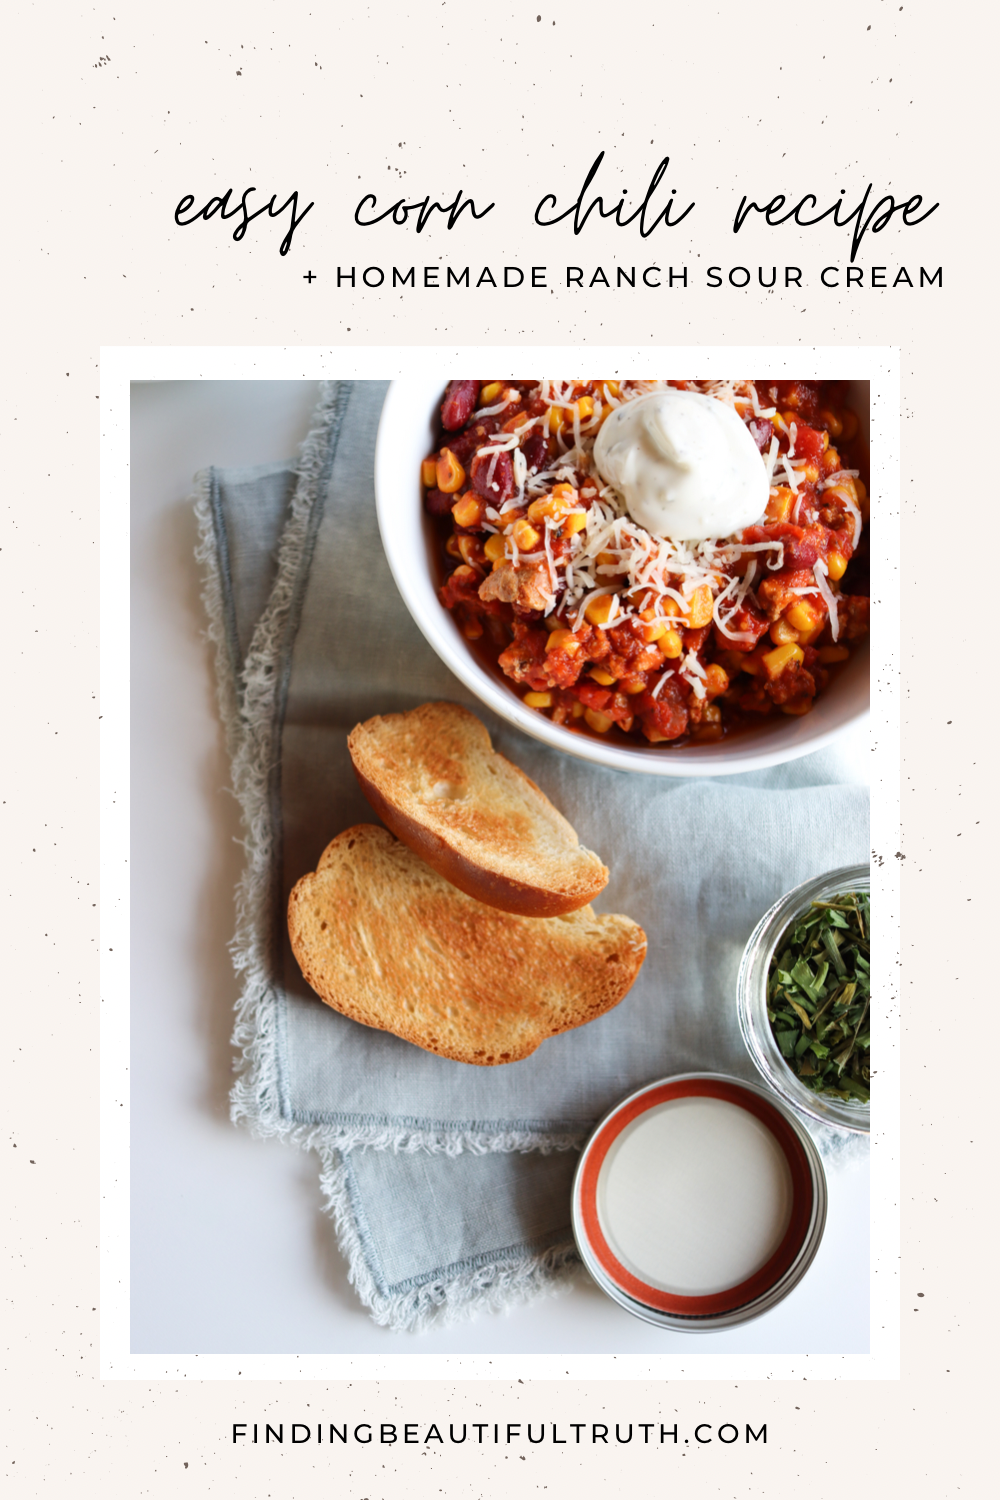 corn chili recipe + homemade ranch sour cream | Finding Beautiful Truth